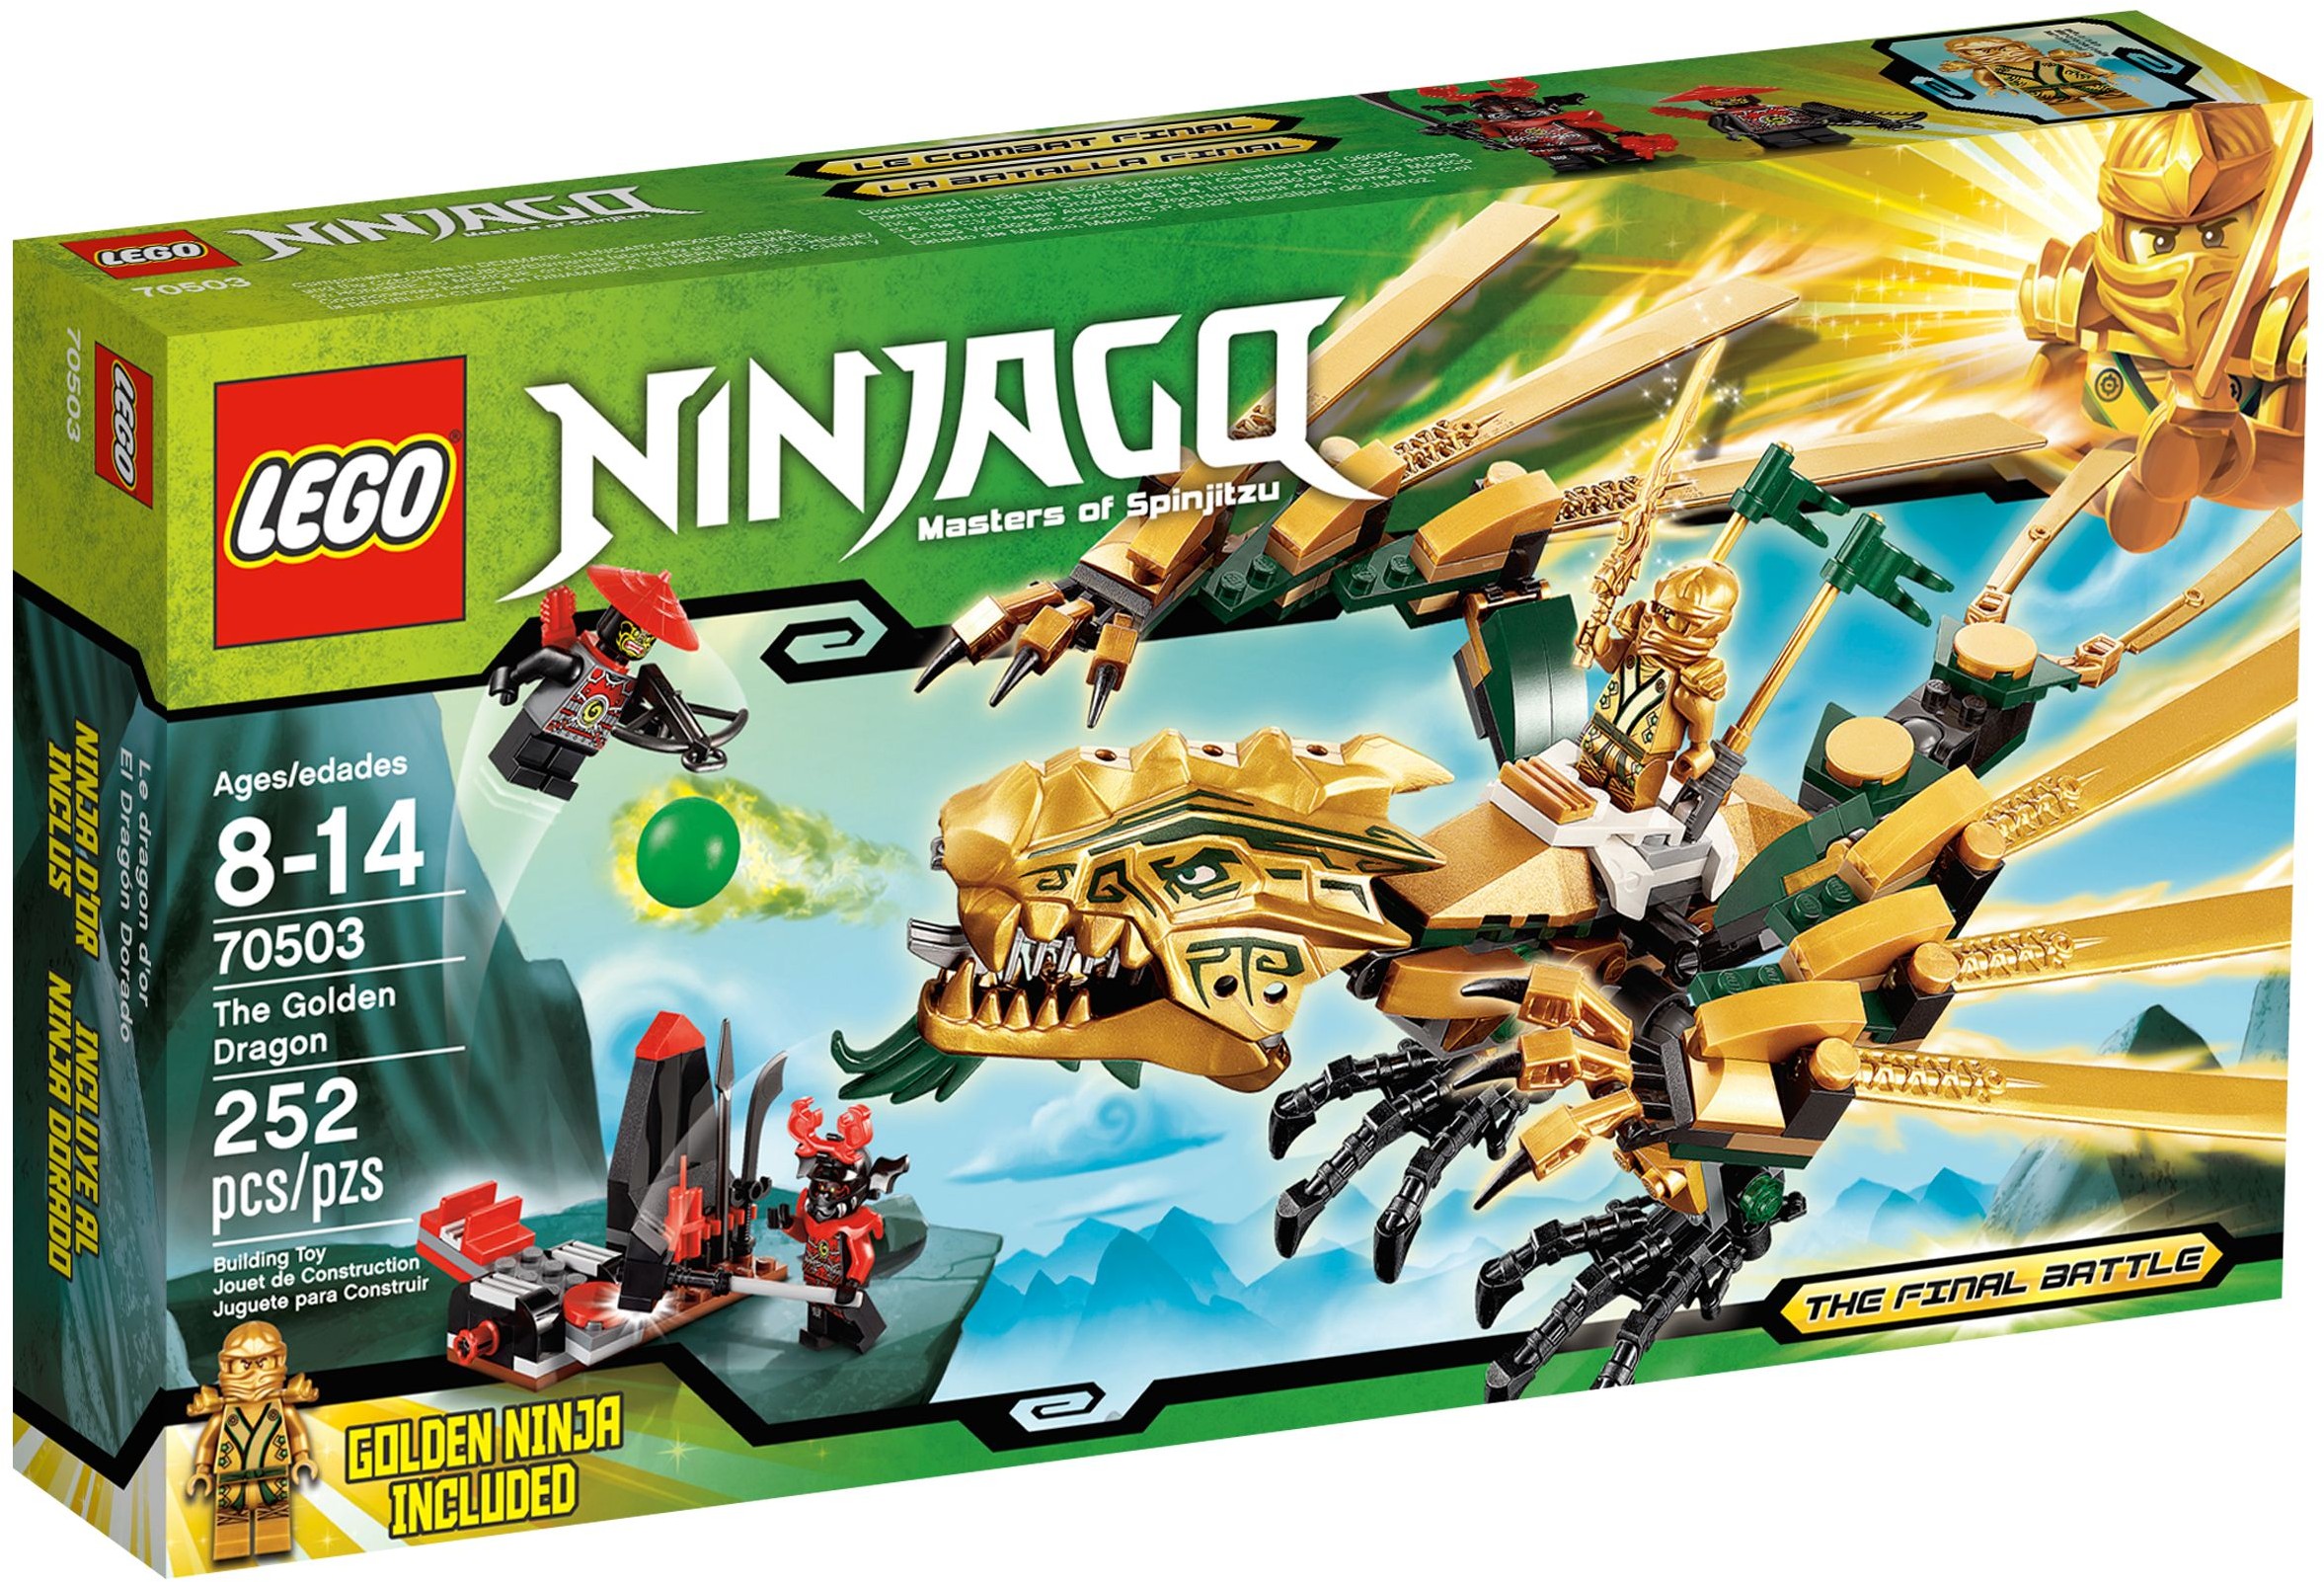 Lego DRAGON HEAD & JAW from Ninjago set 70503 Golden Dragon 